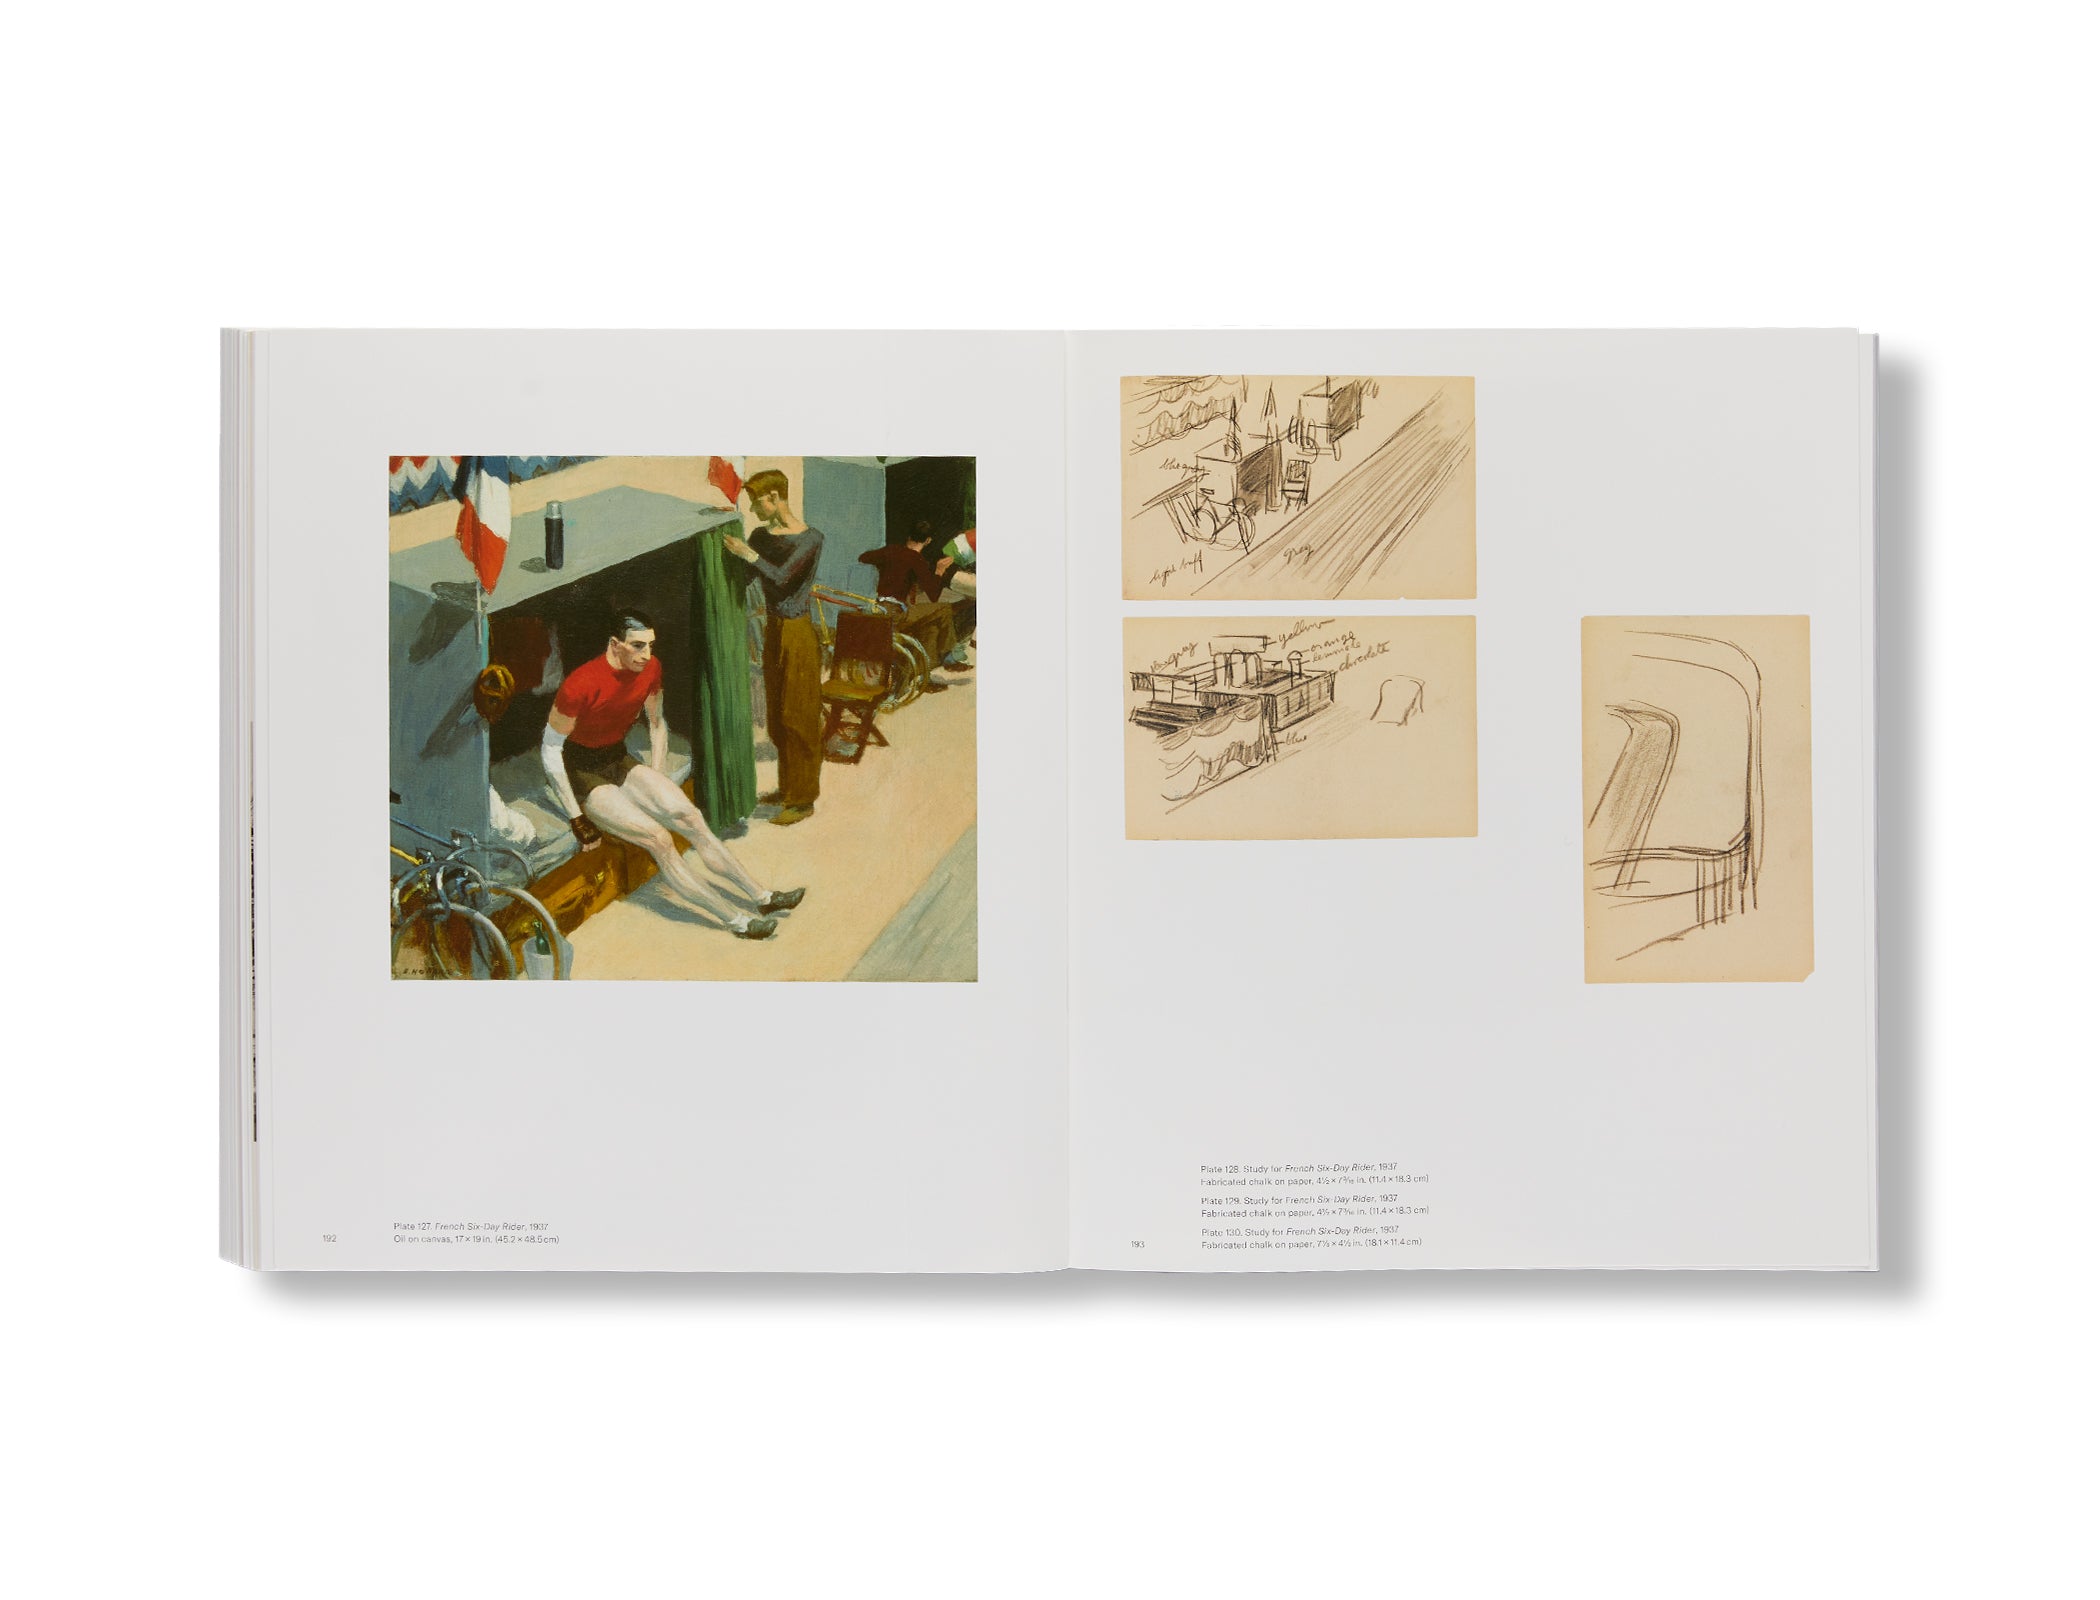 EDWARD HOPPER'S NEW YORK by Edward Hopper – twelvebooks